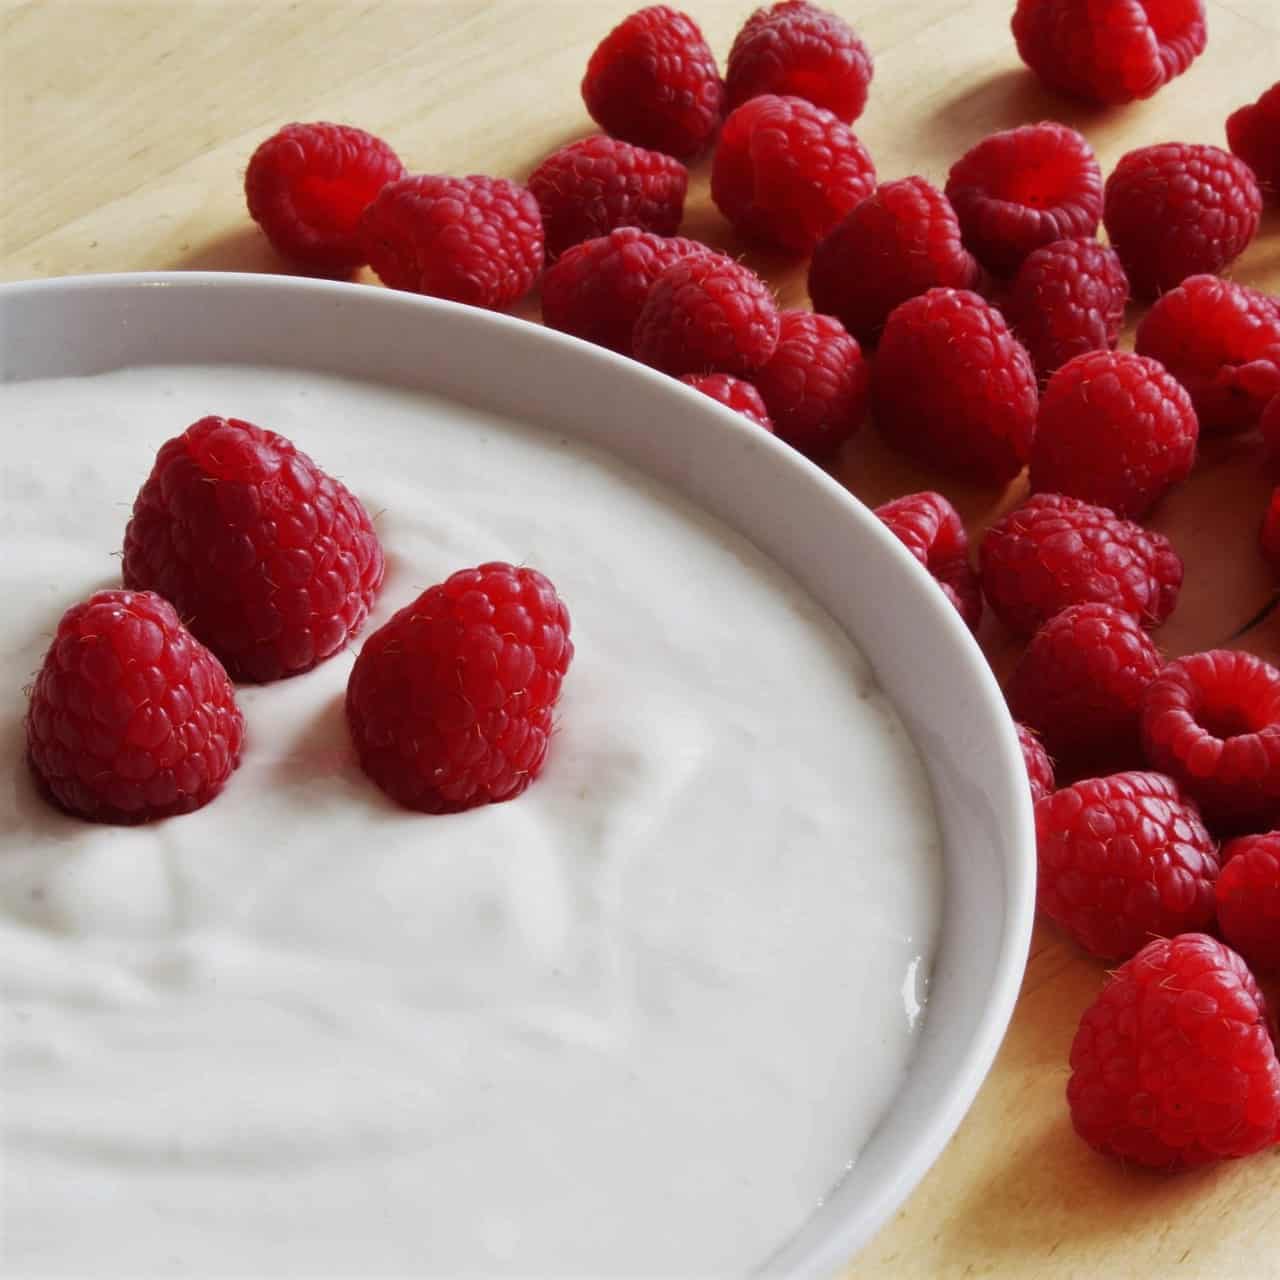 Raspberry and youghurt